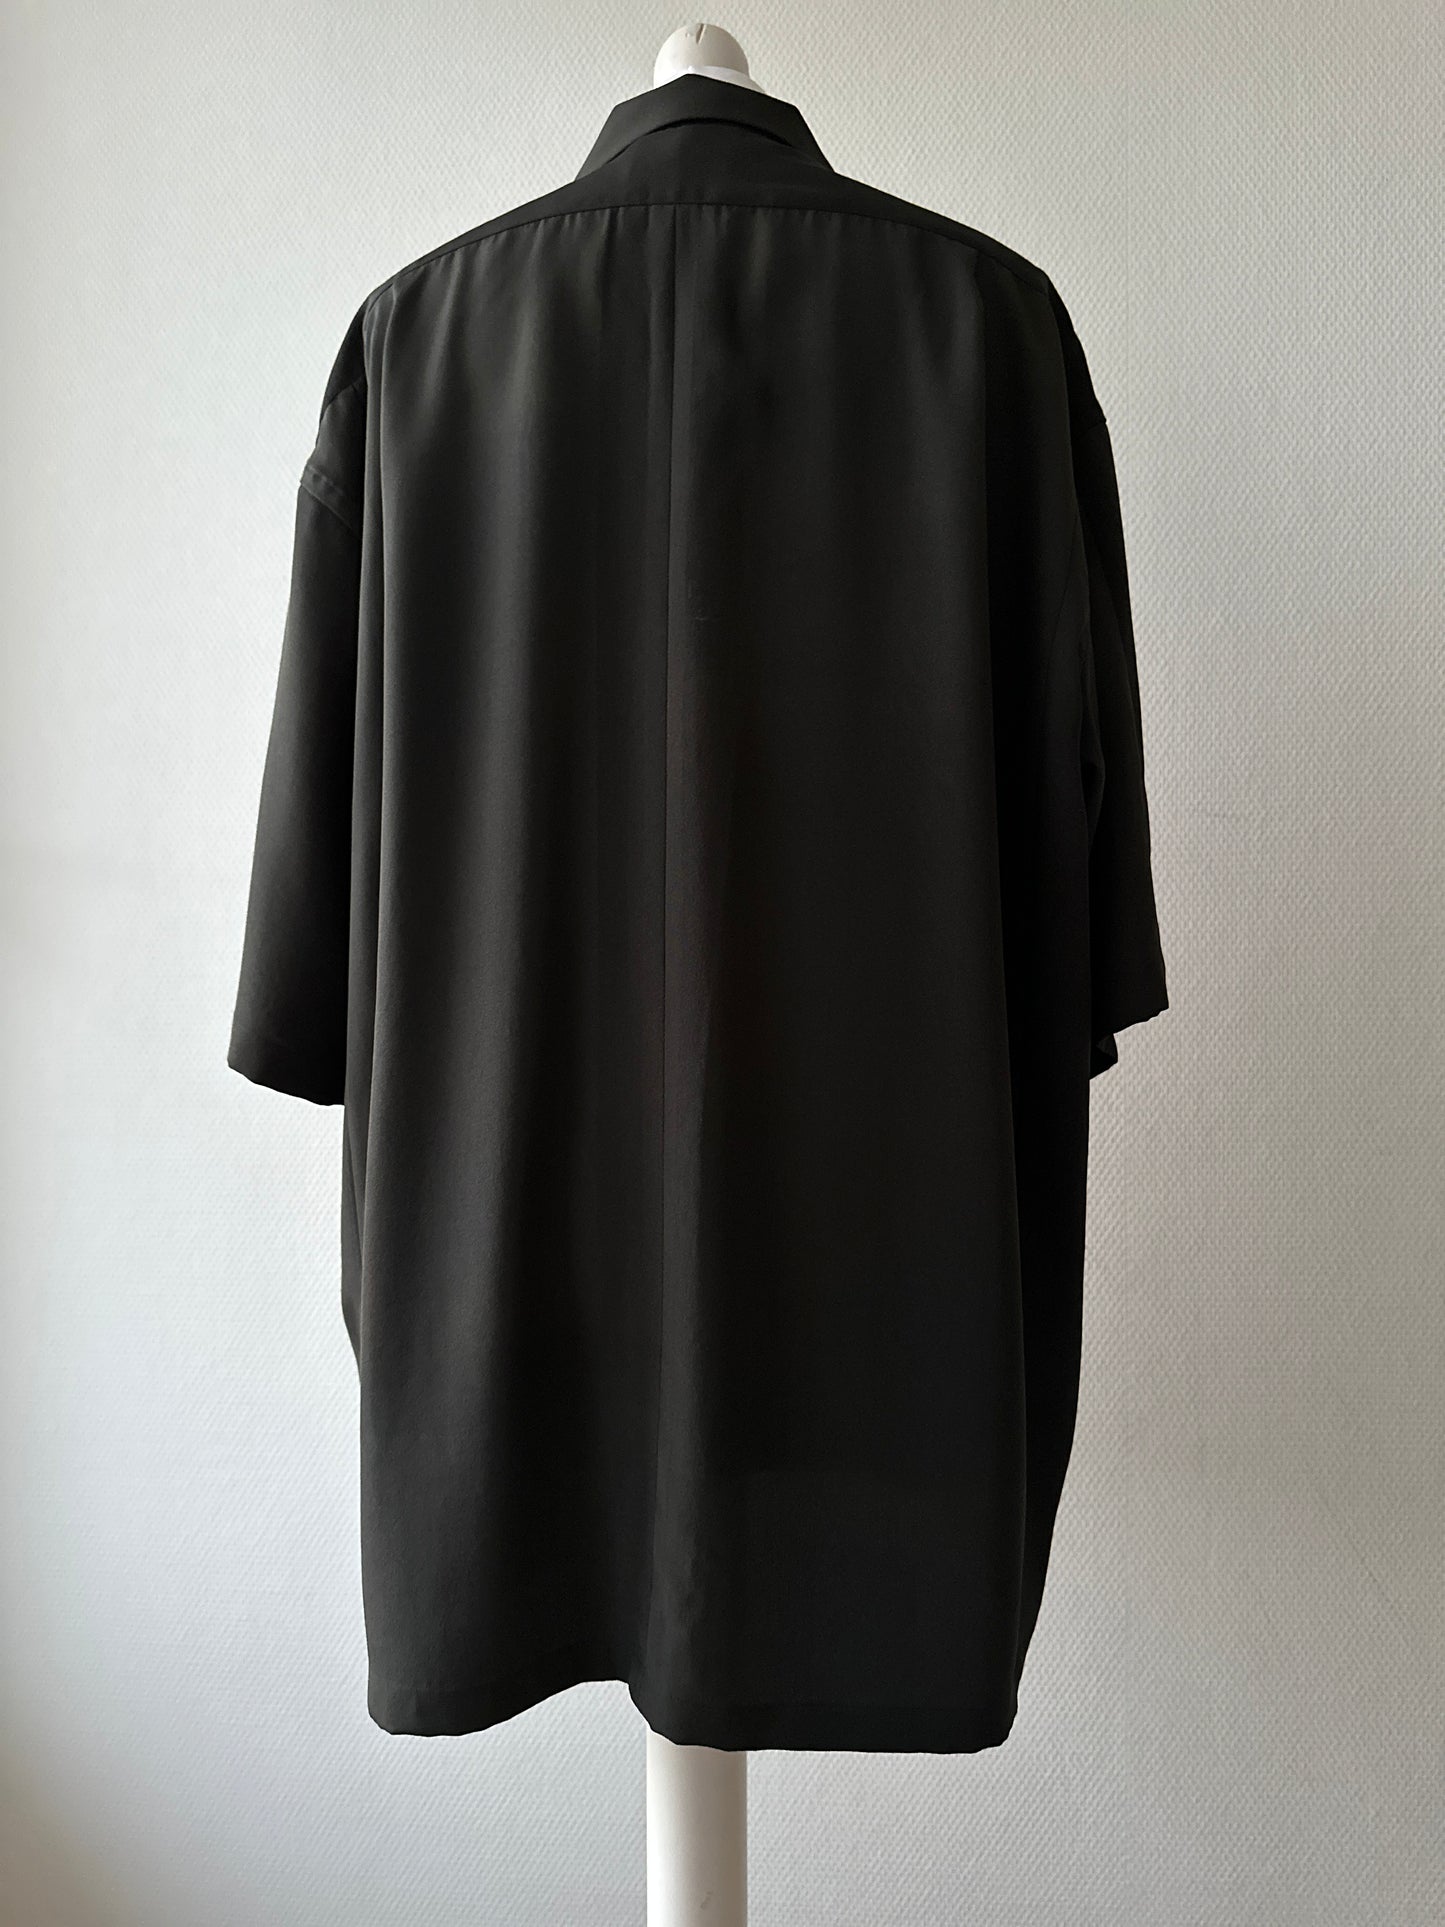 【Black and Gold,Kissho】Hawaiian shirt/Size:3L＜New・Silk＞For Men,For Women,Japanese kimono,Japan unisexese Clothing,unisex,Japanese Gifts,Original Item